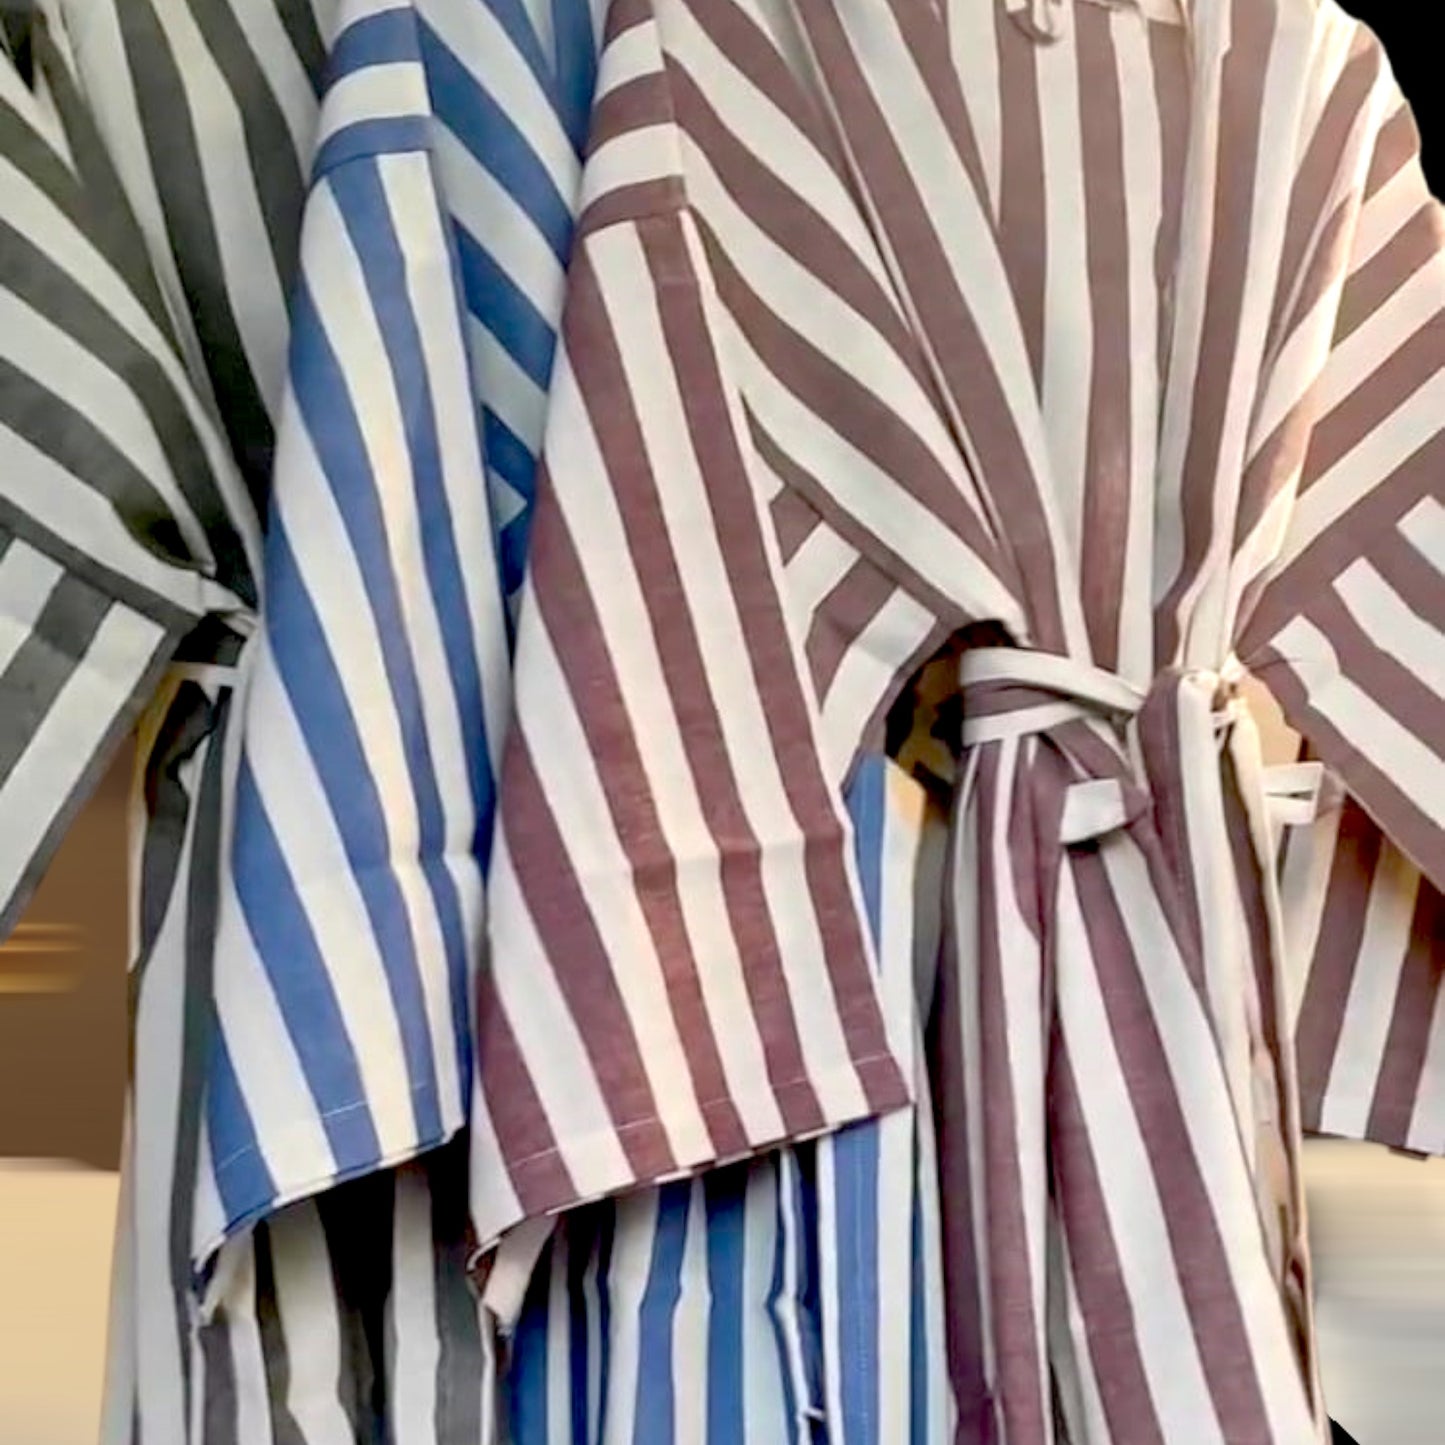 Hand-Made Turkish Towel Kimono Robe Kaftan